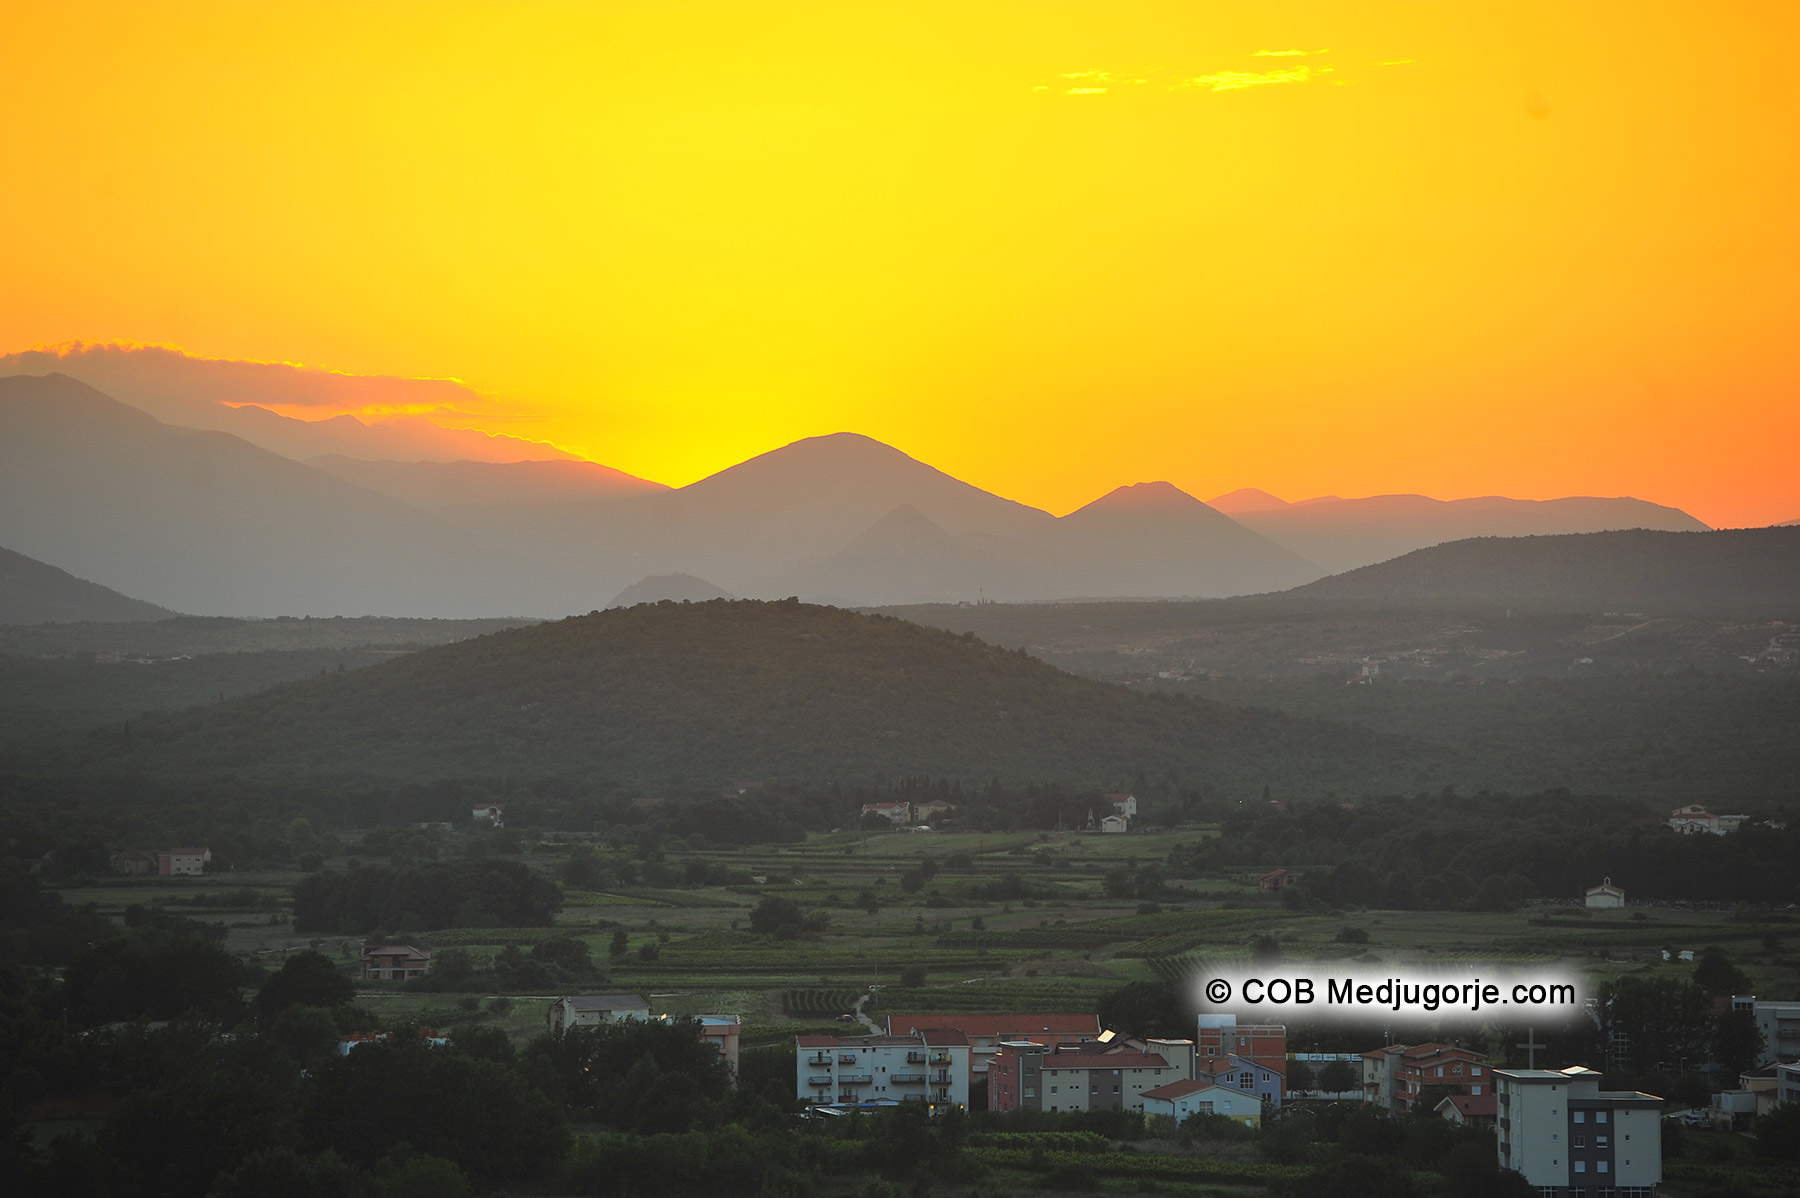 Sunset in Medjugorje August 4, 2014